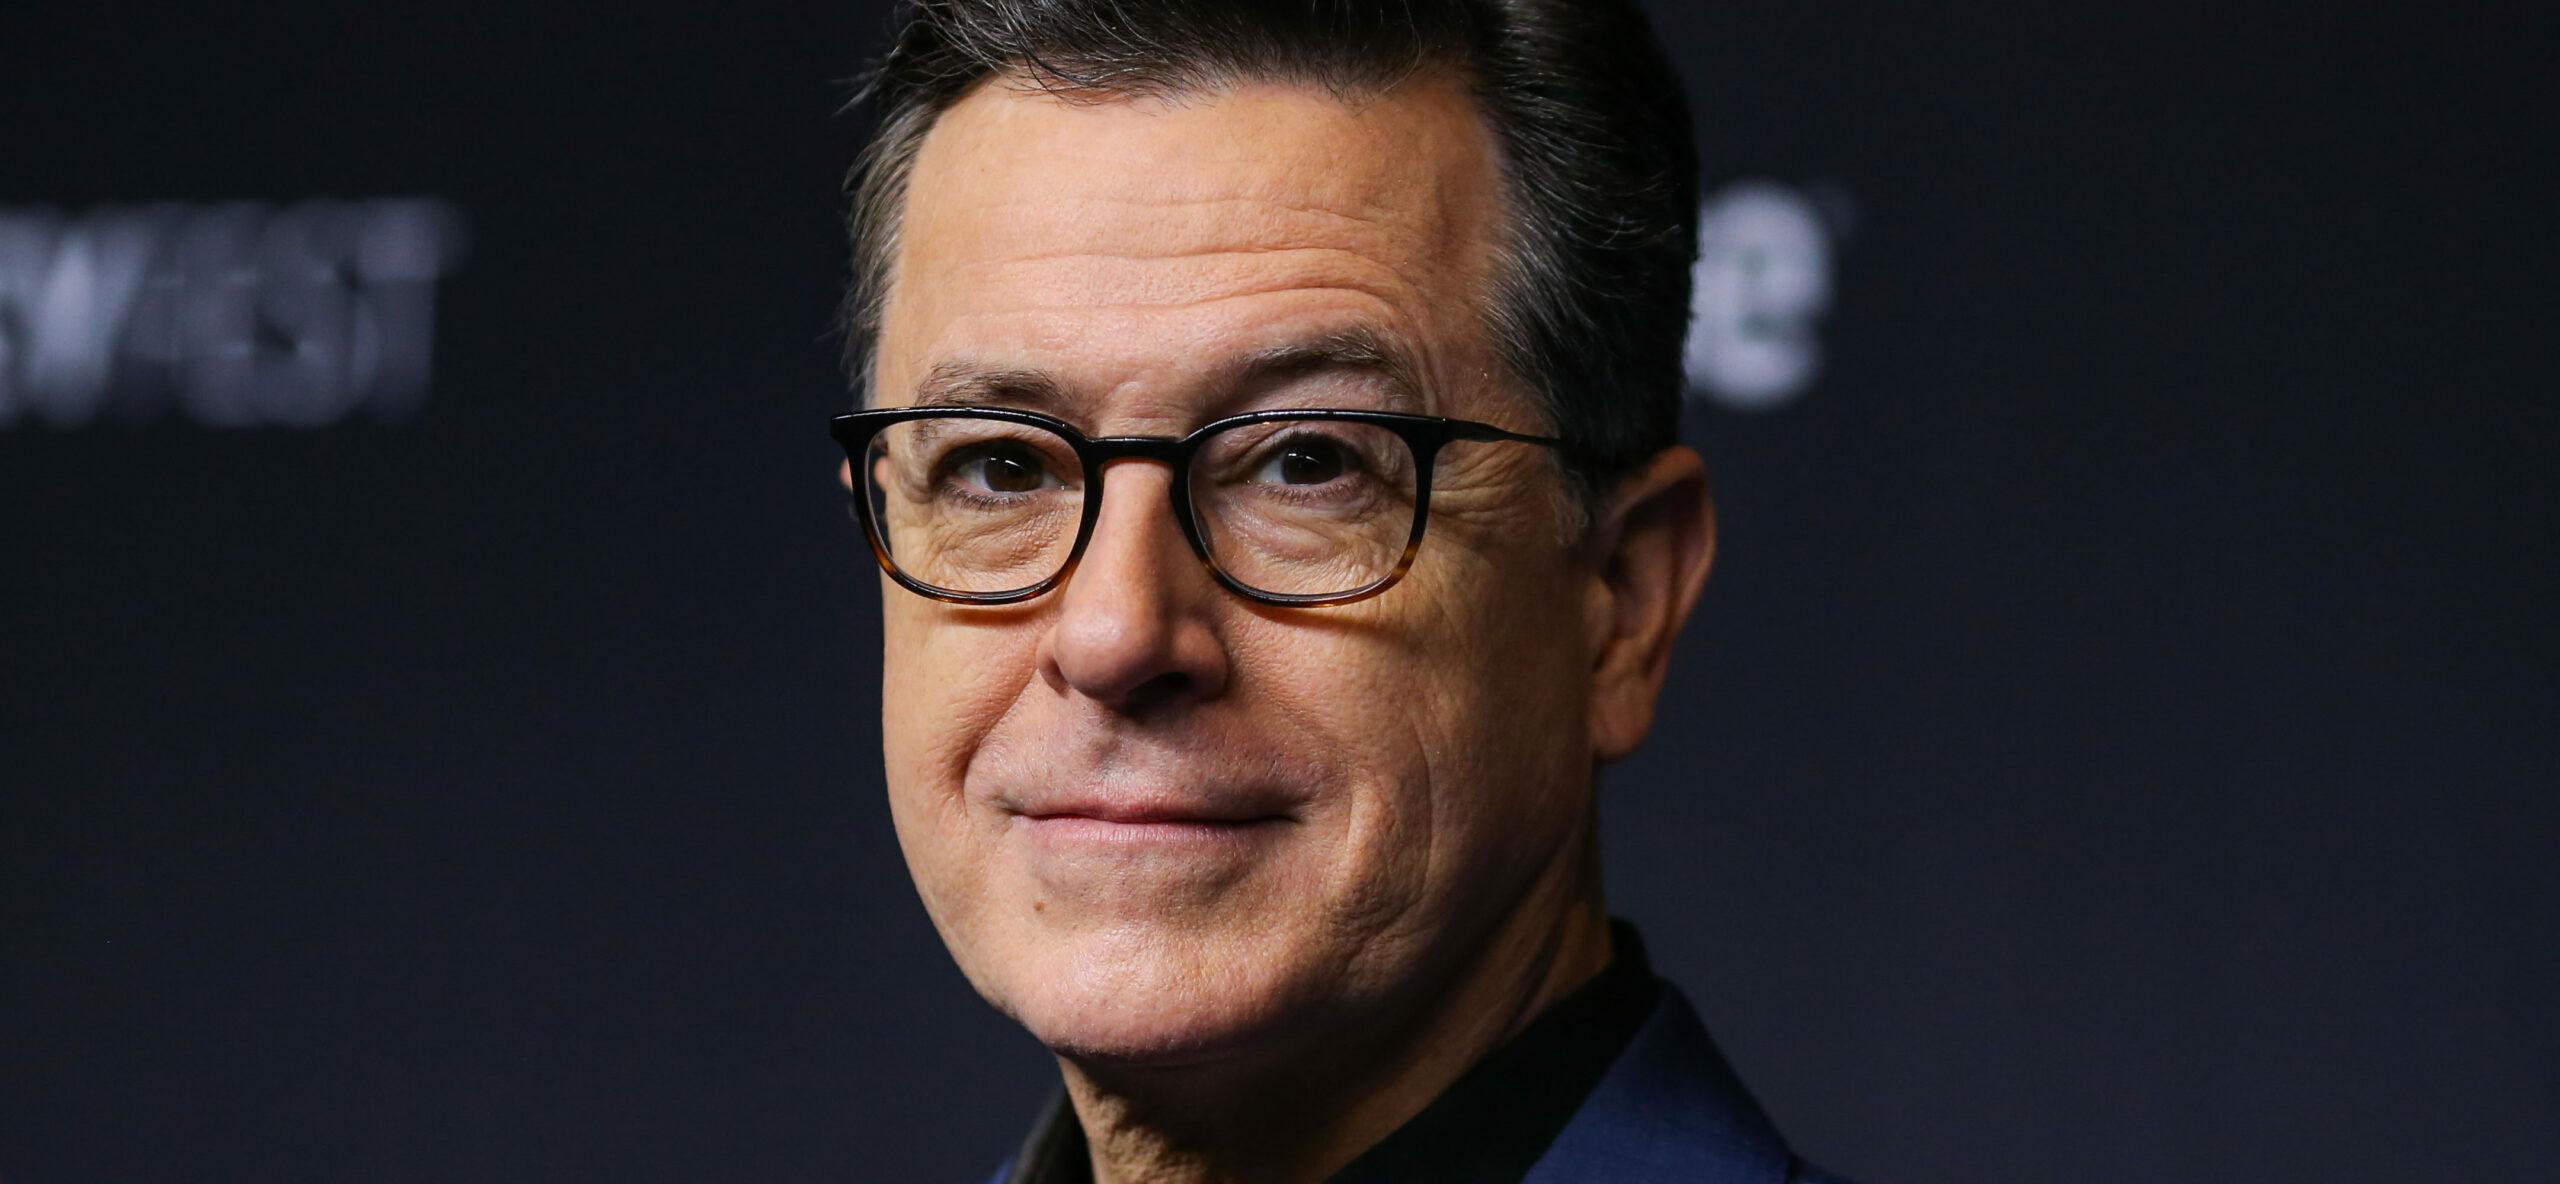 2019 PaleyFest LA - CBS's 'An Evening with Stephen Colbert'